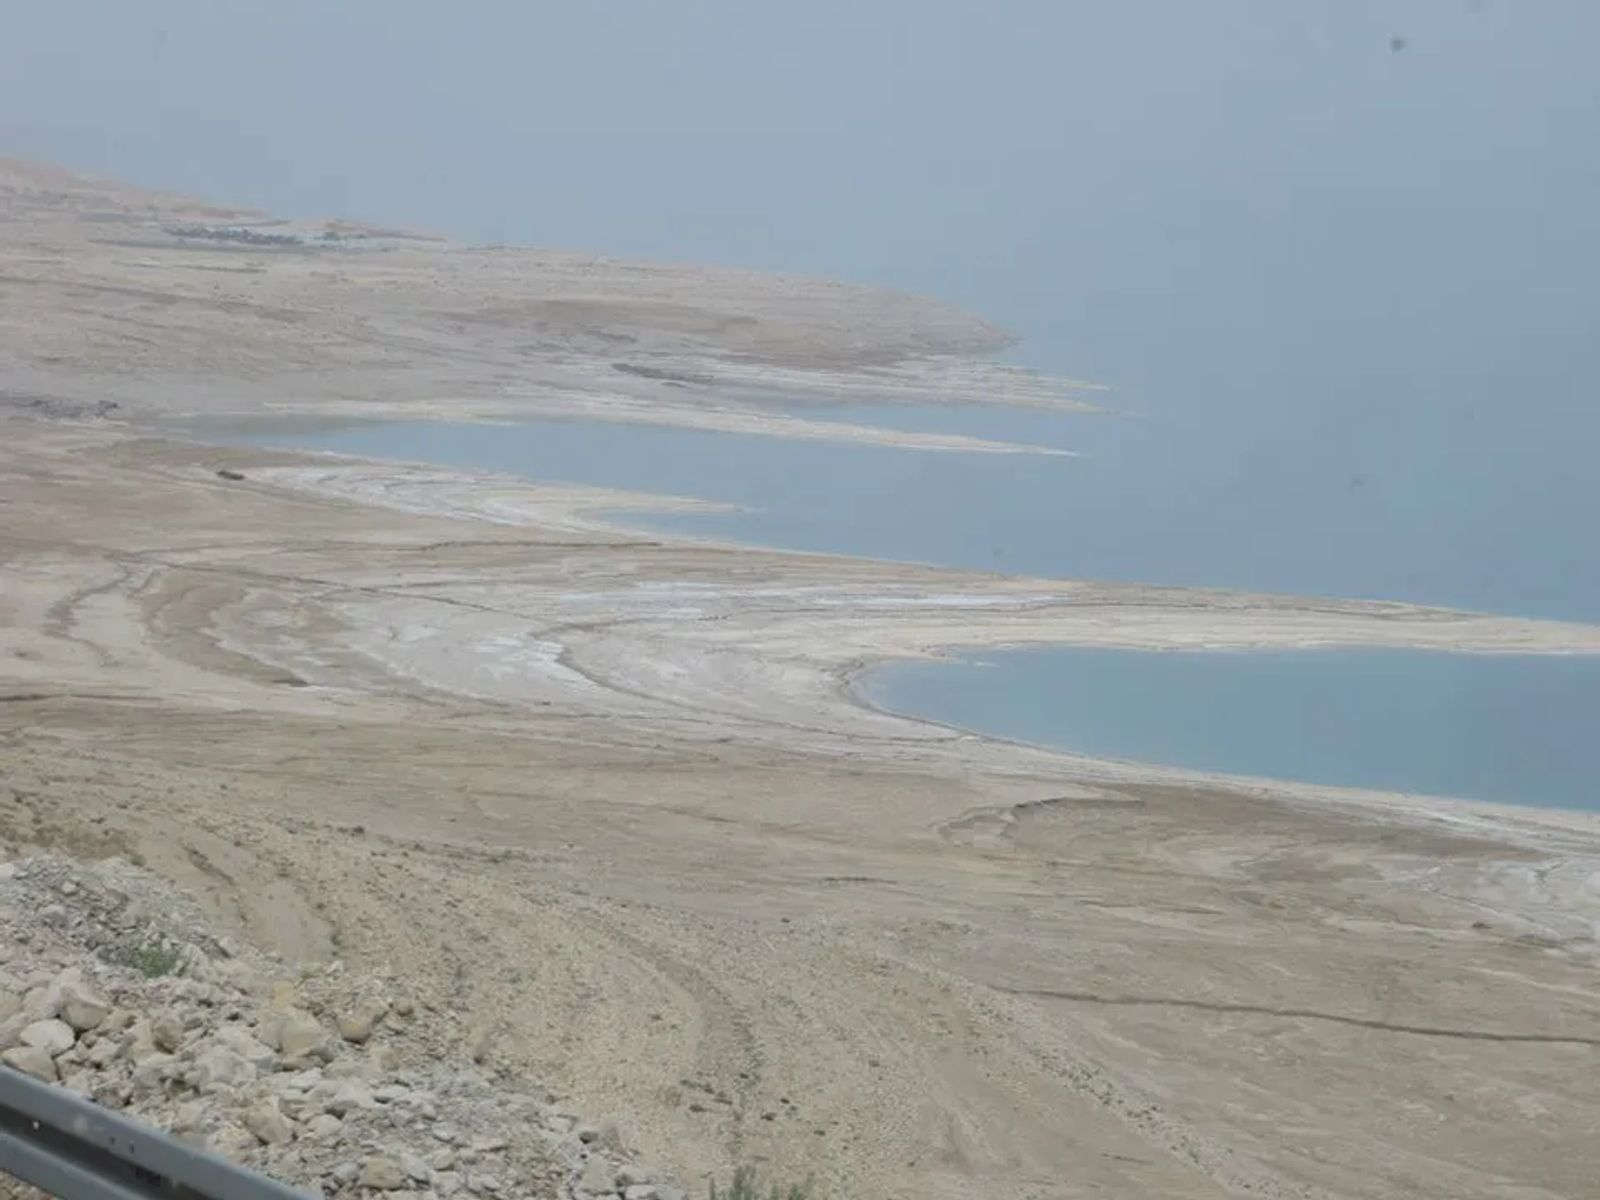 The Dead Sea Minerals - Culture Trekking - #DeadSeaMinerals #DeadSea #DeadSeainIsrael